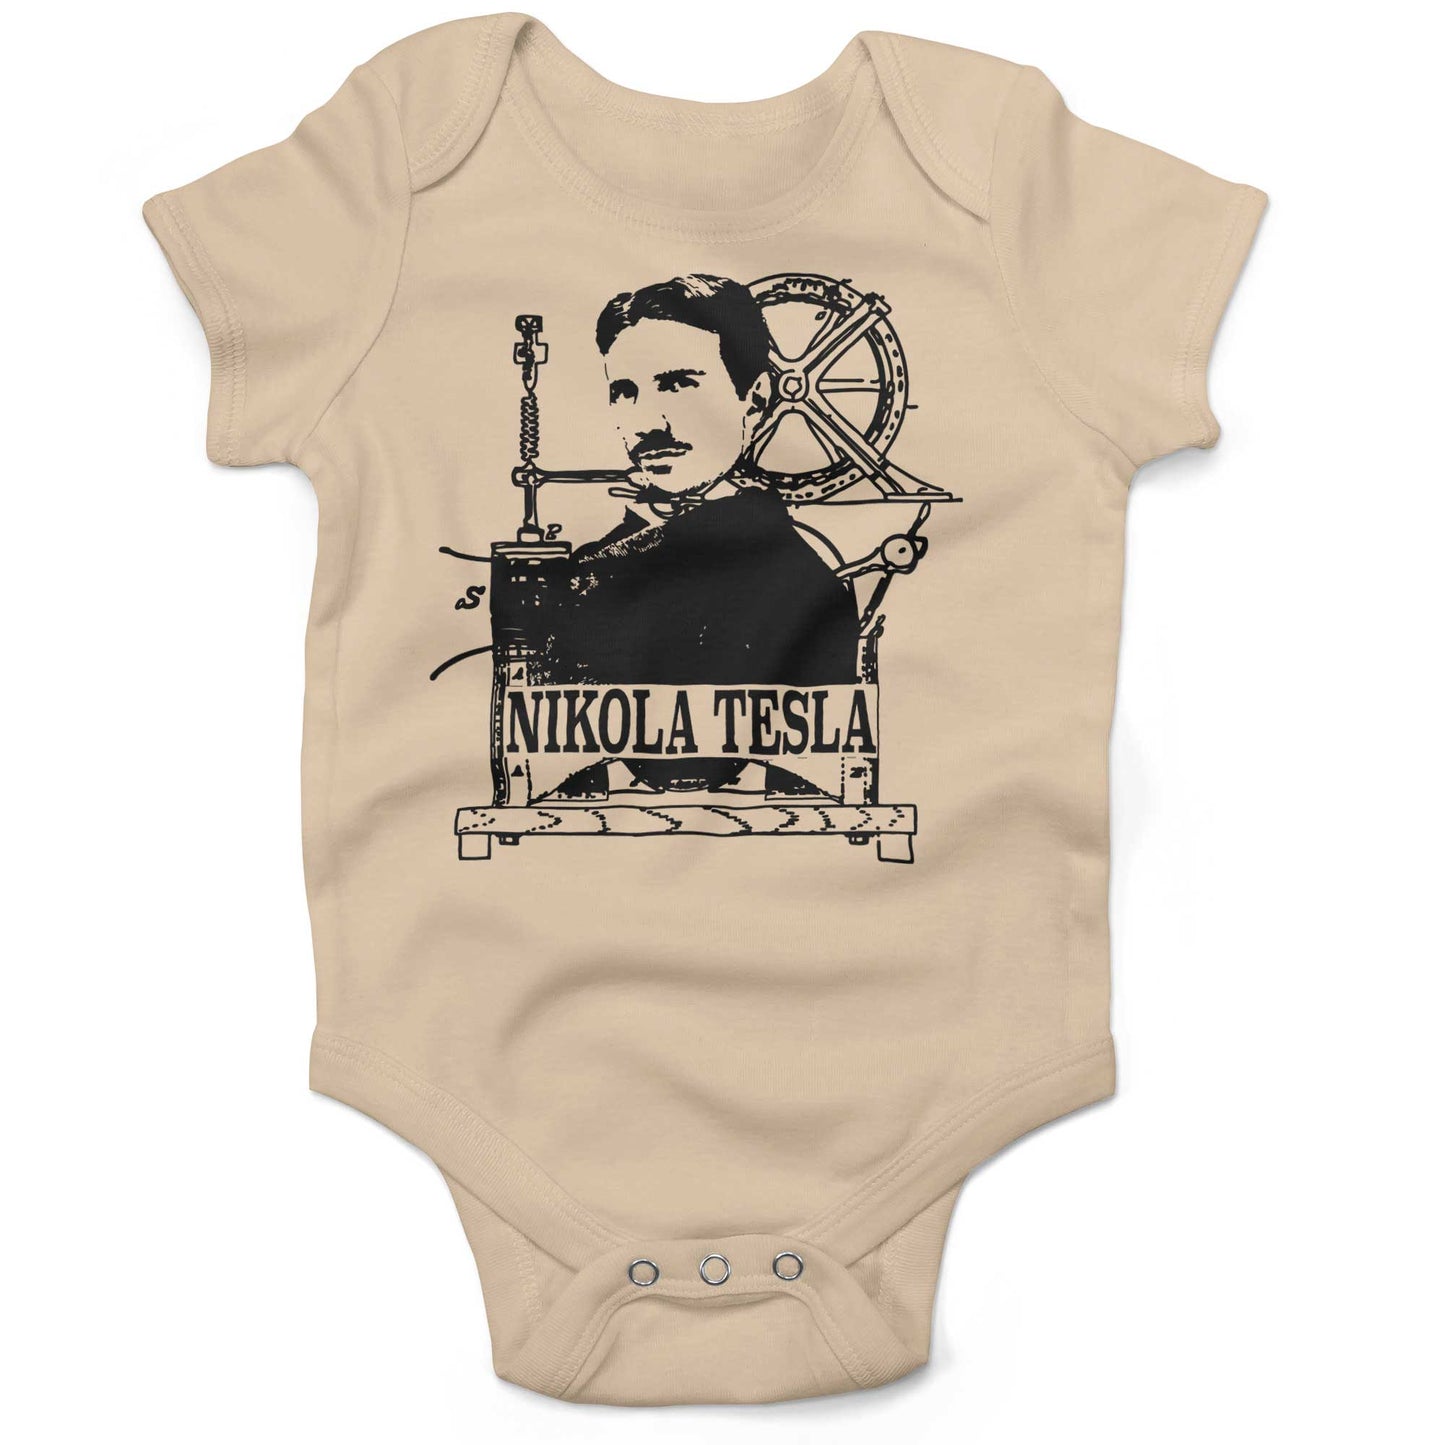 Nikola Tesla Infant Bodysuit-Organic Natural-3-6 months